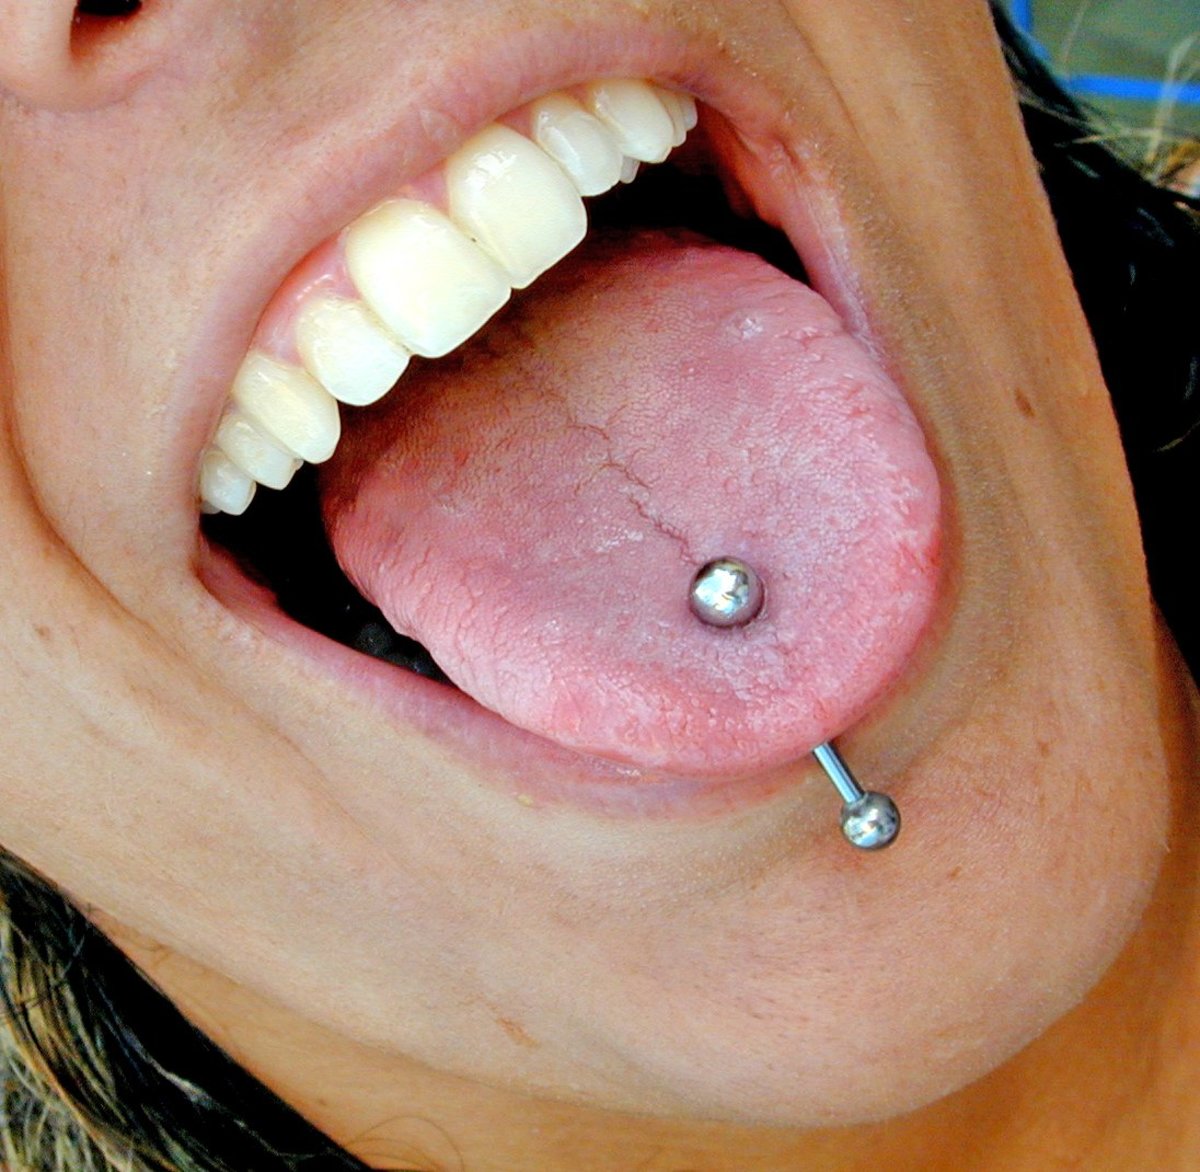 Close-up of a tongue piercing